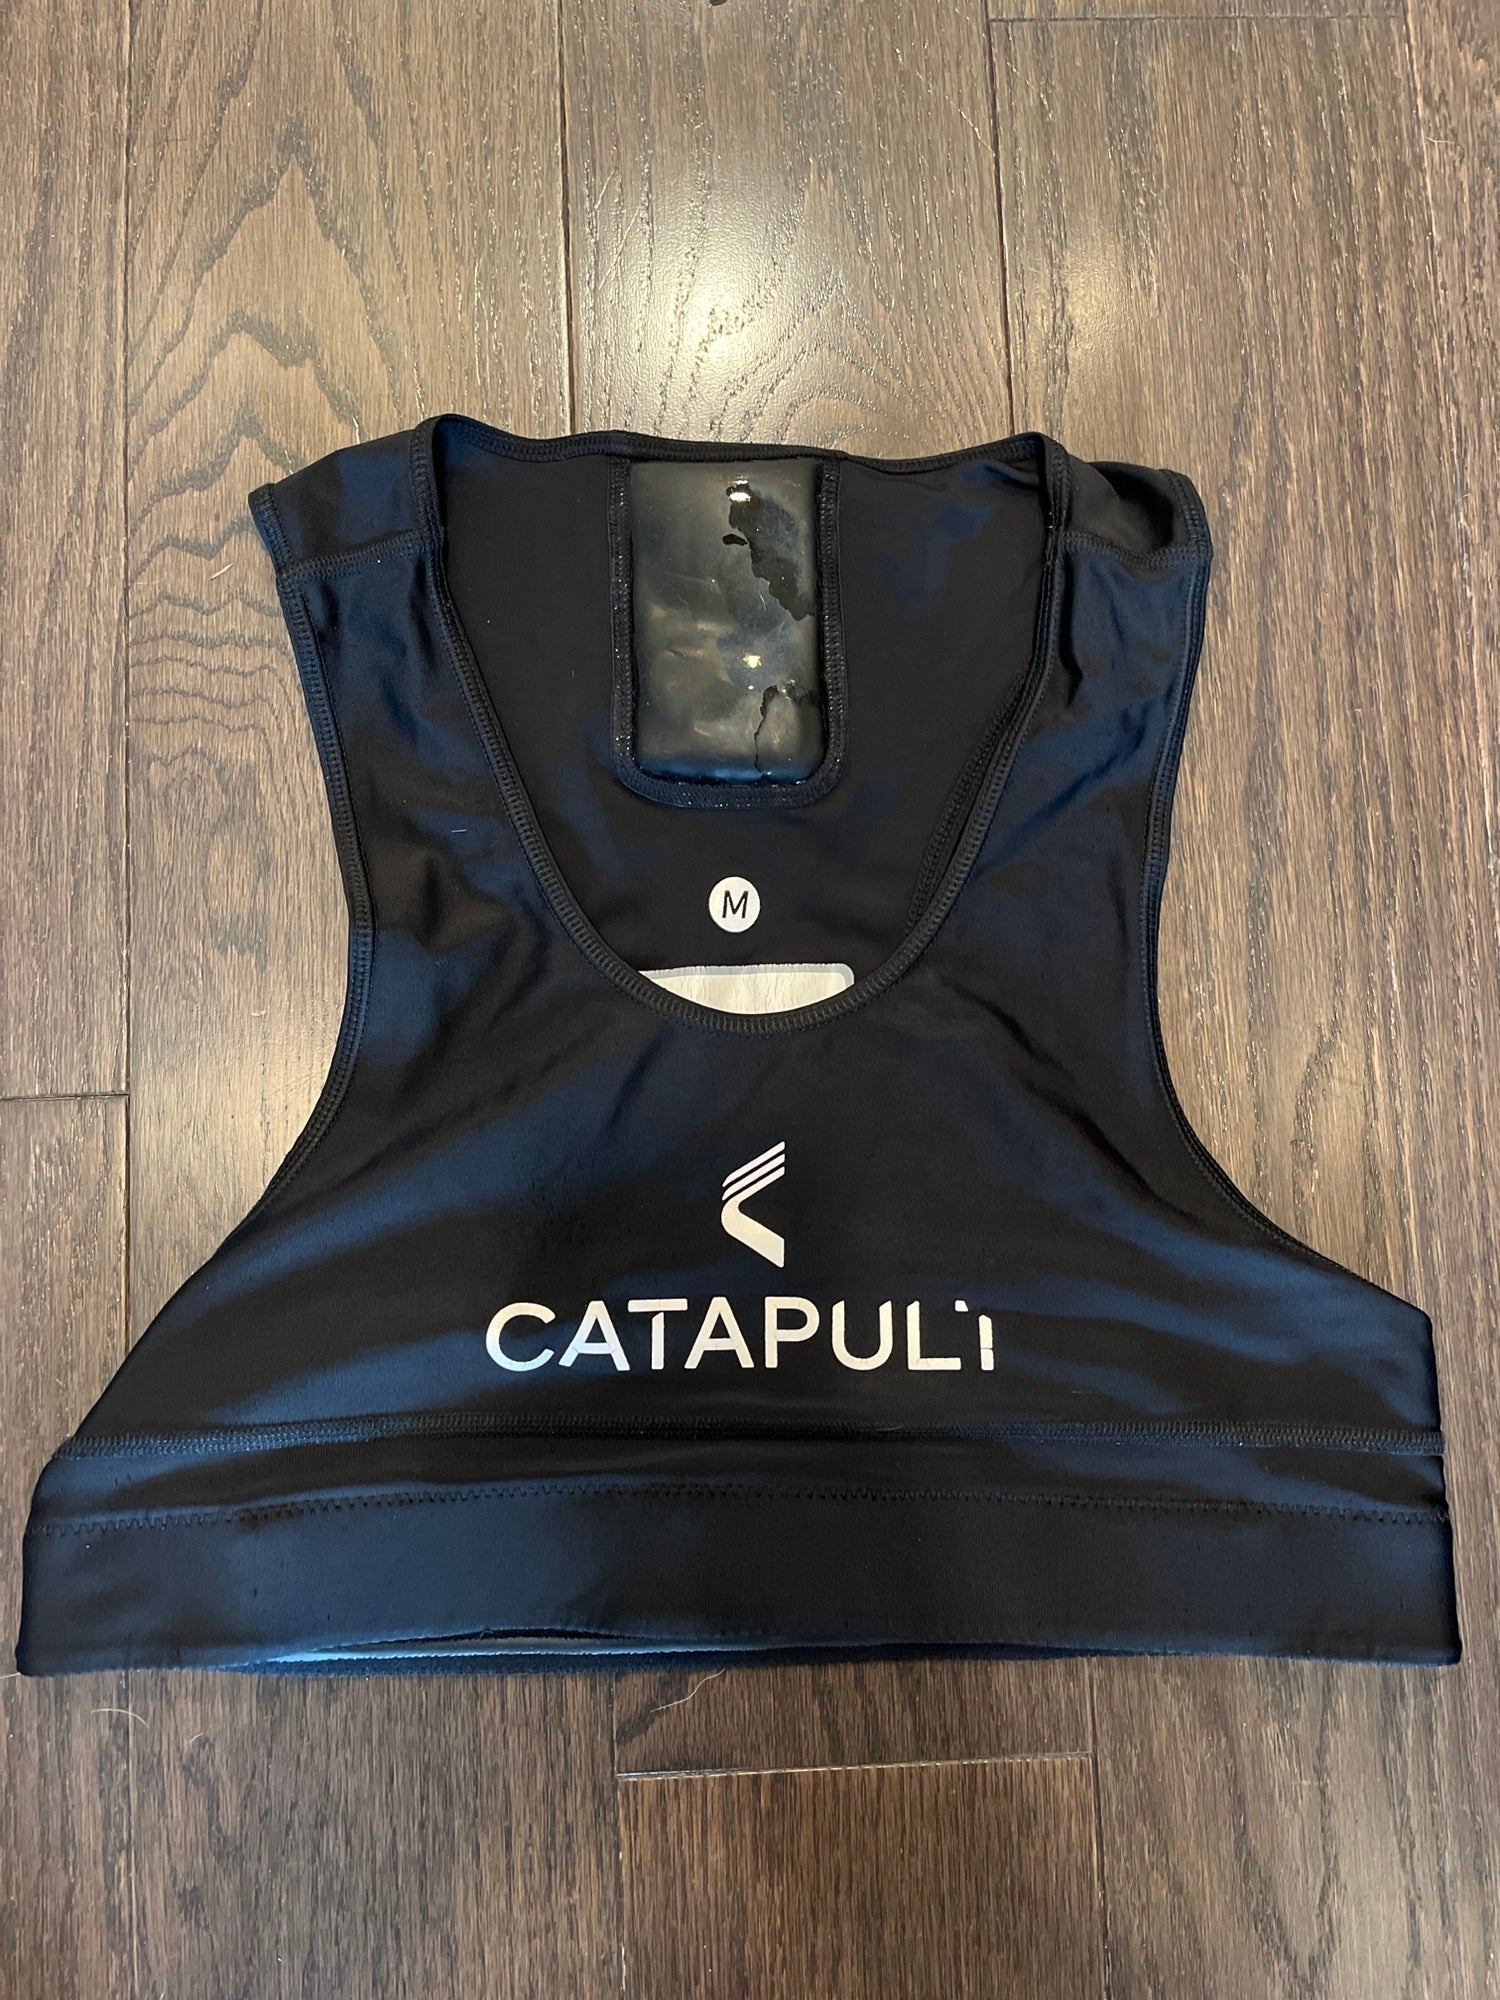 Catapult Training Vest *used*